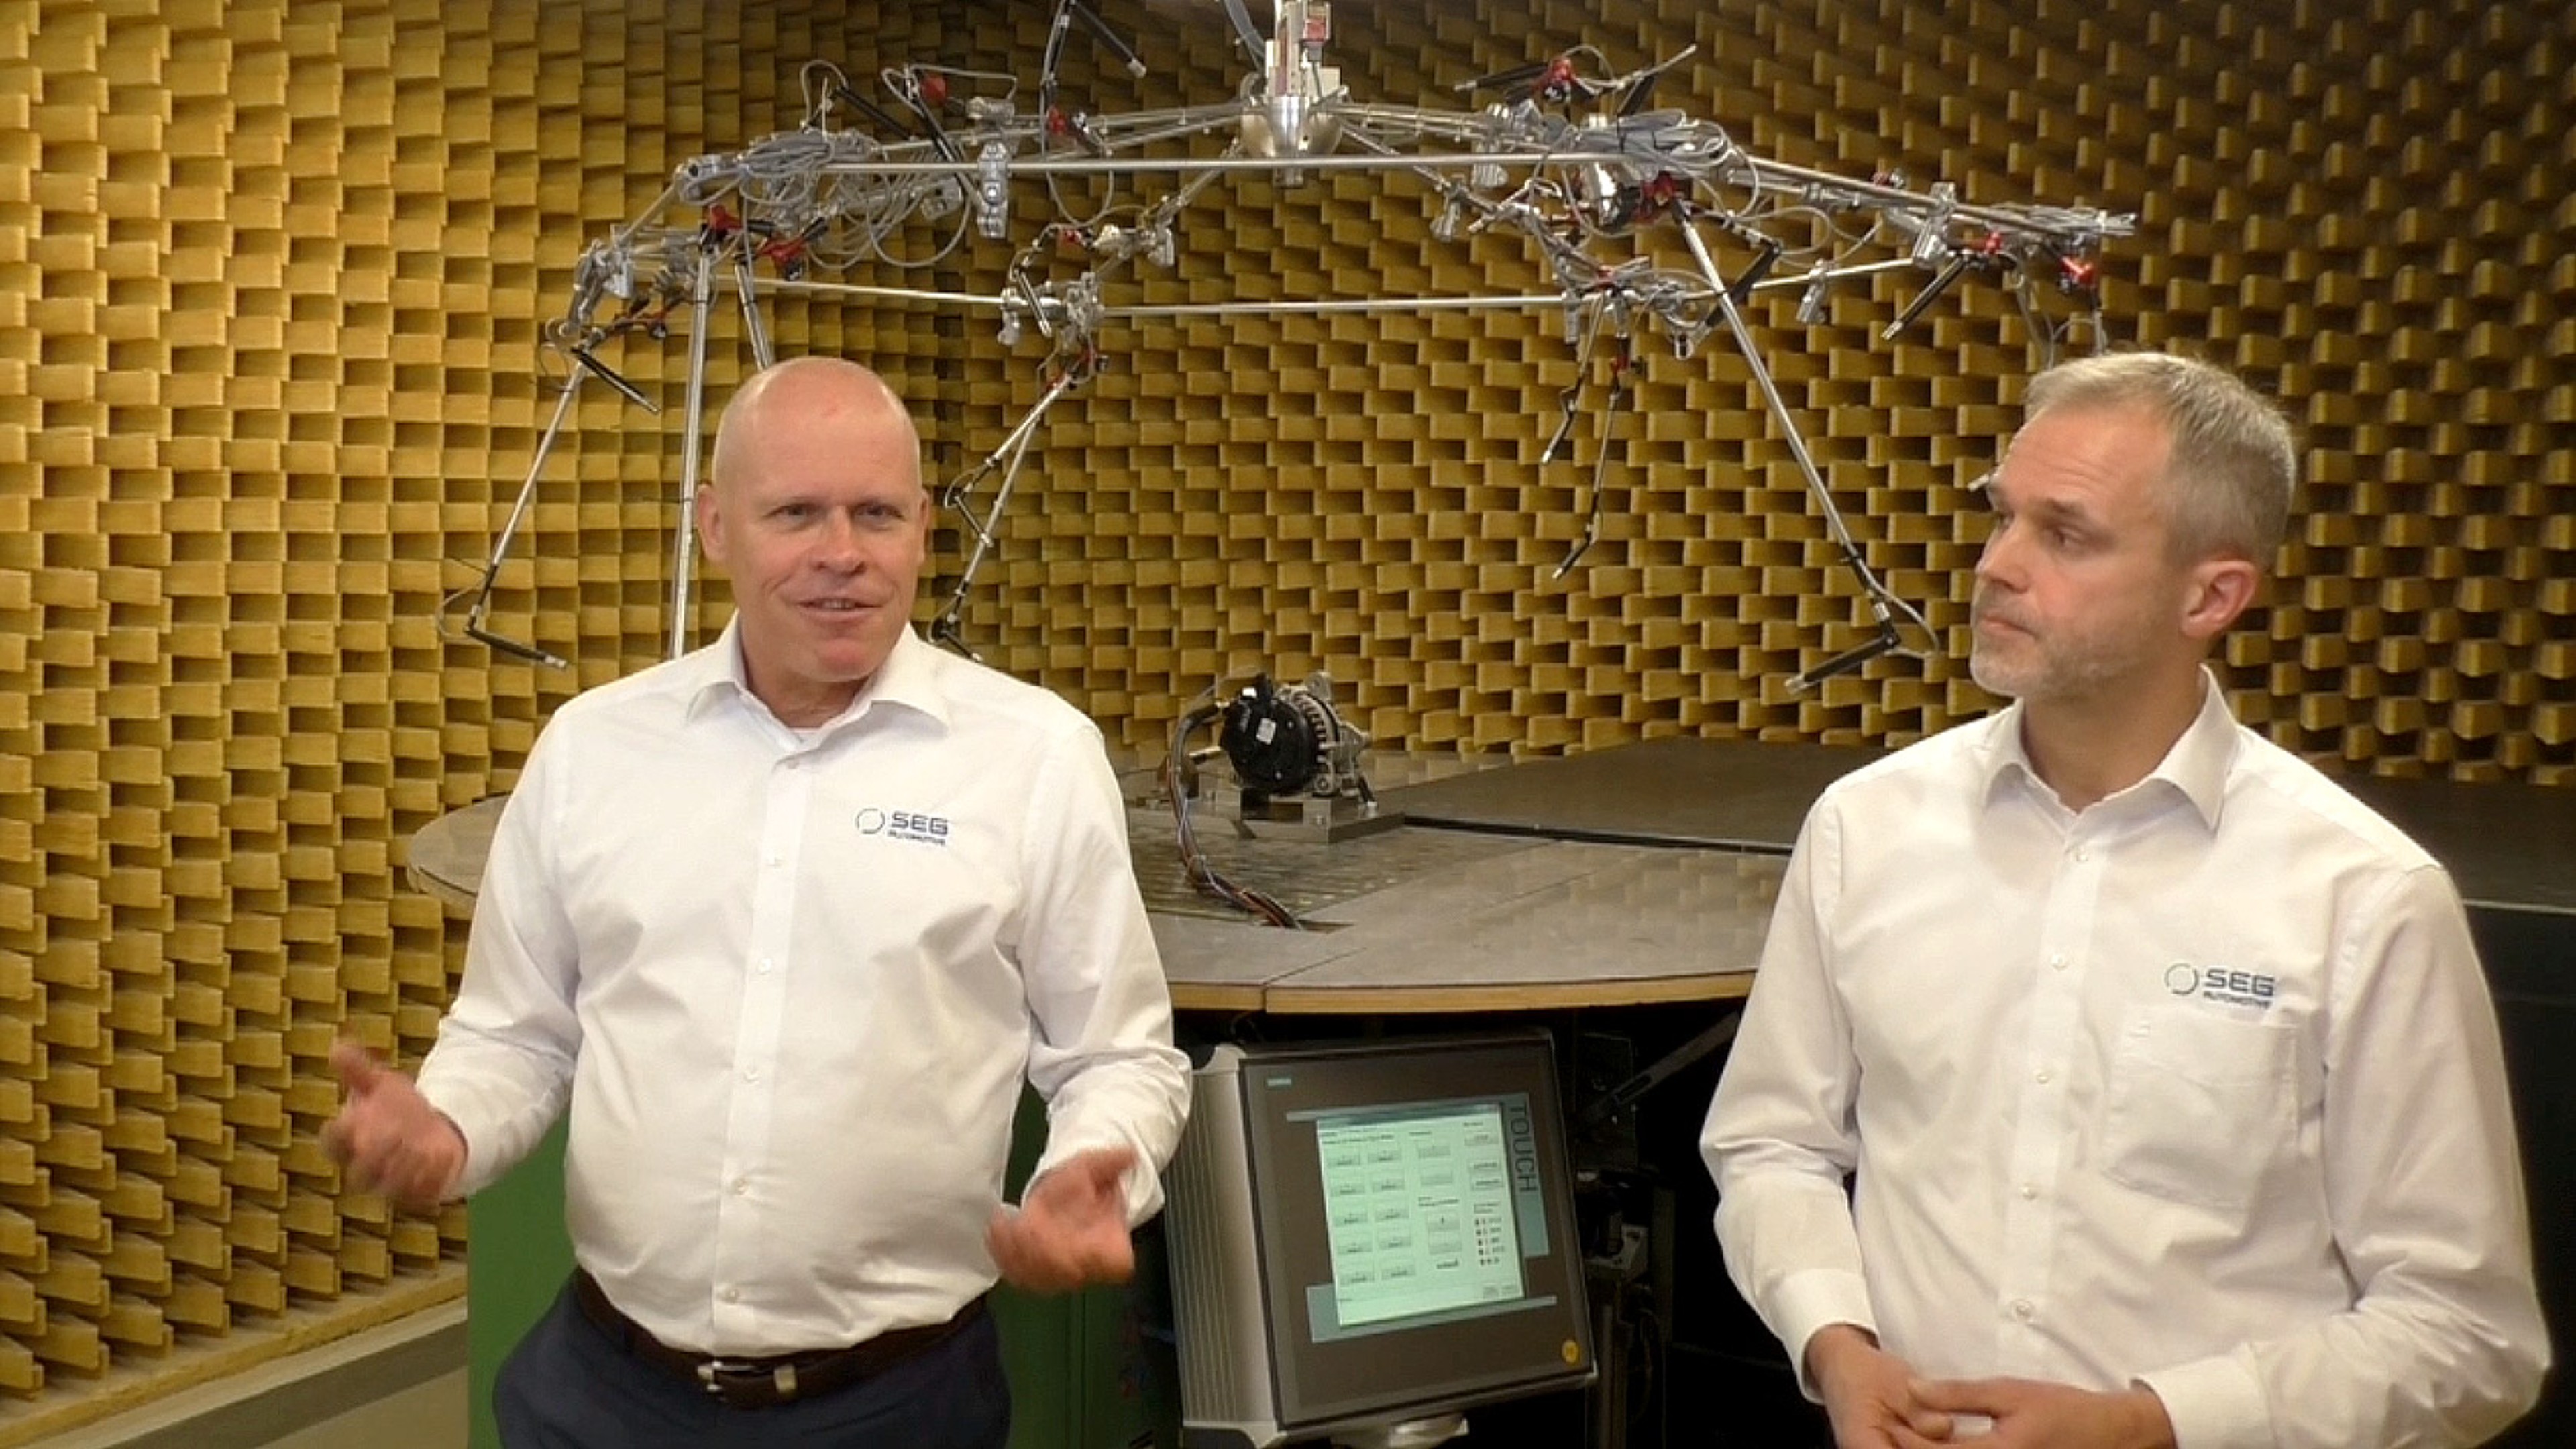 Peter Sokol博士和 Nikolaus Pröbsting先生在索恩格汽车的噪音实验室中